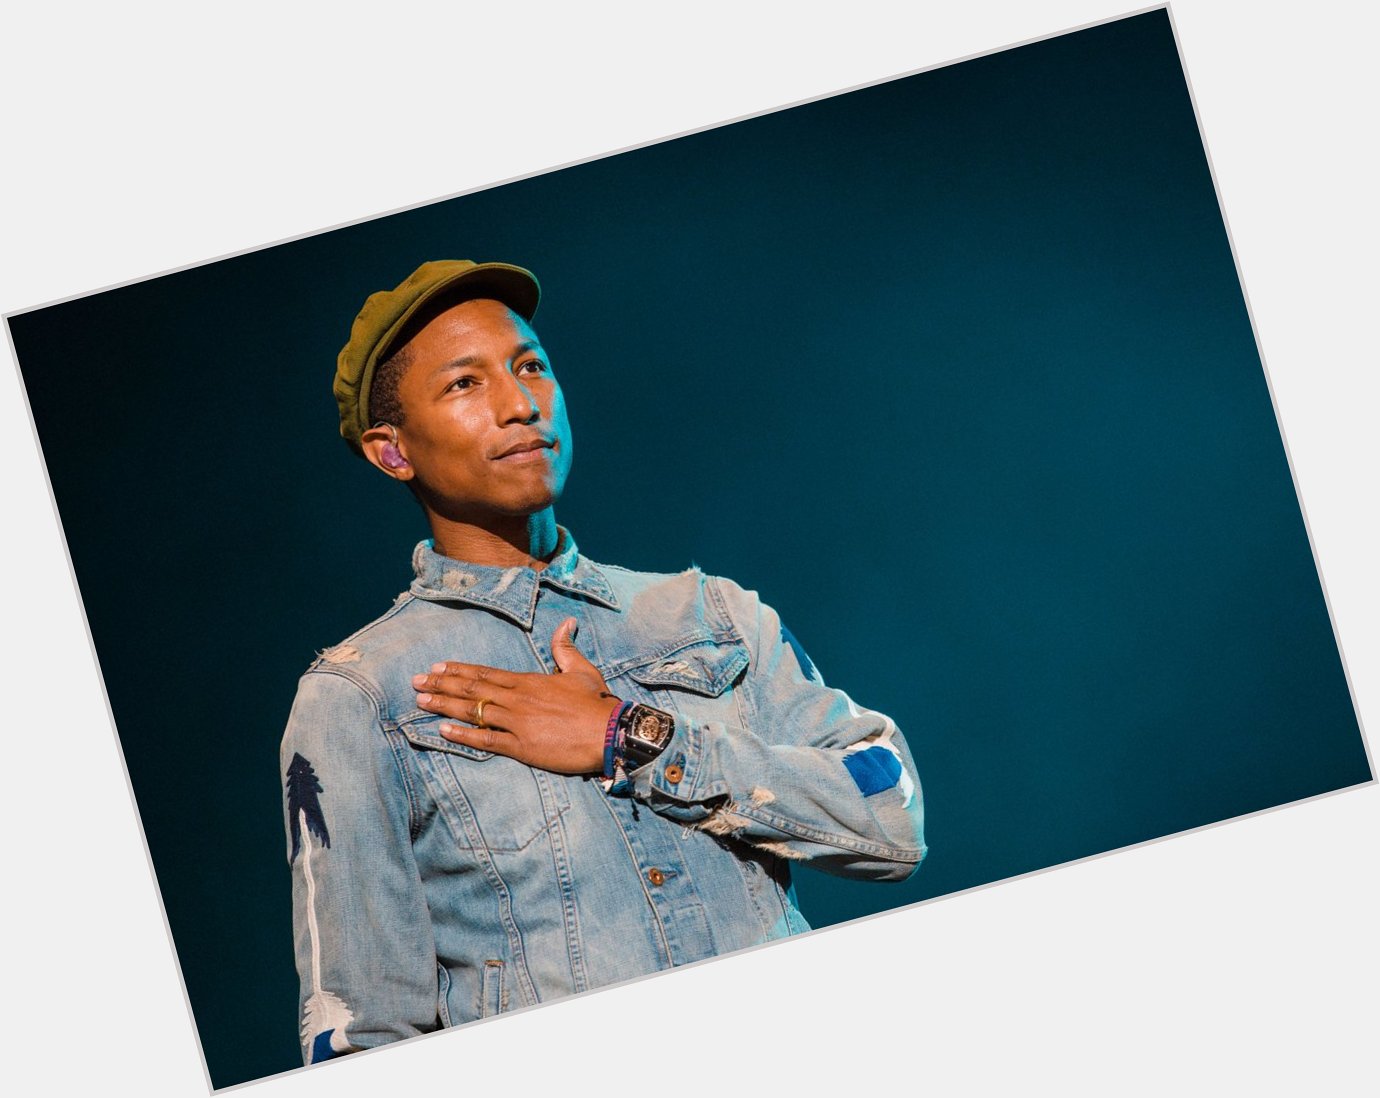 Let\s all wish Pharrell Williams a \"Happy\" Birthday!
.
.
.
.
( : Mauricio Santana / Stringer via Getty Images) 